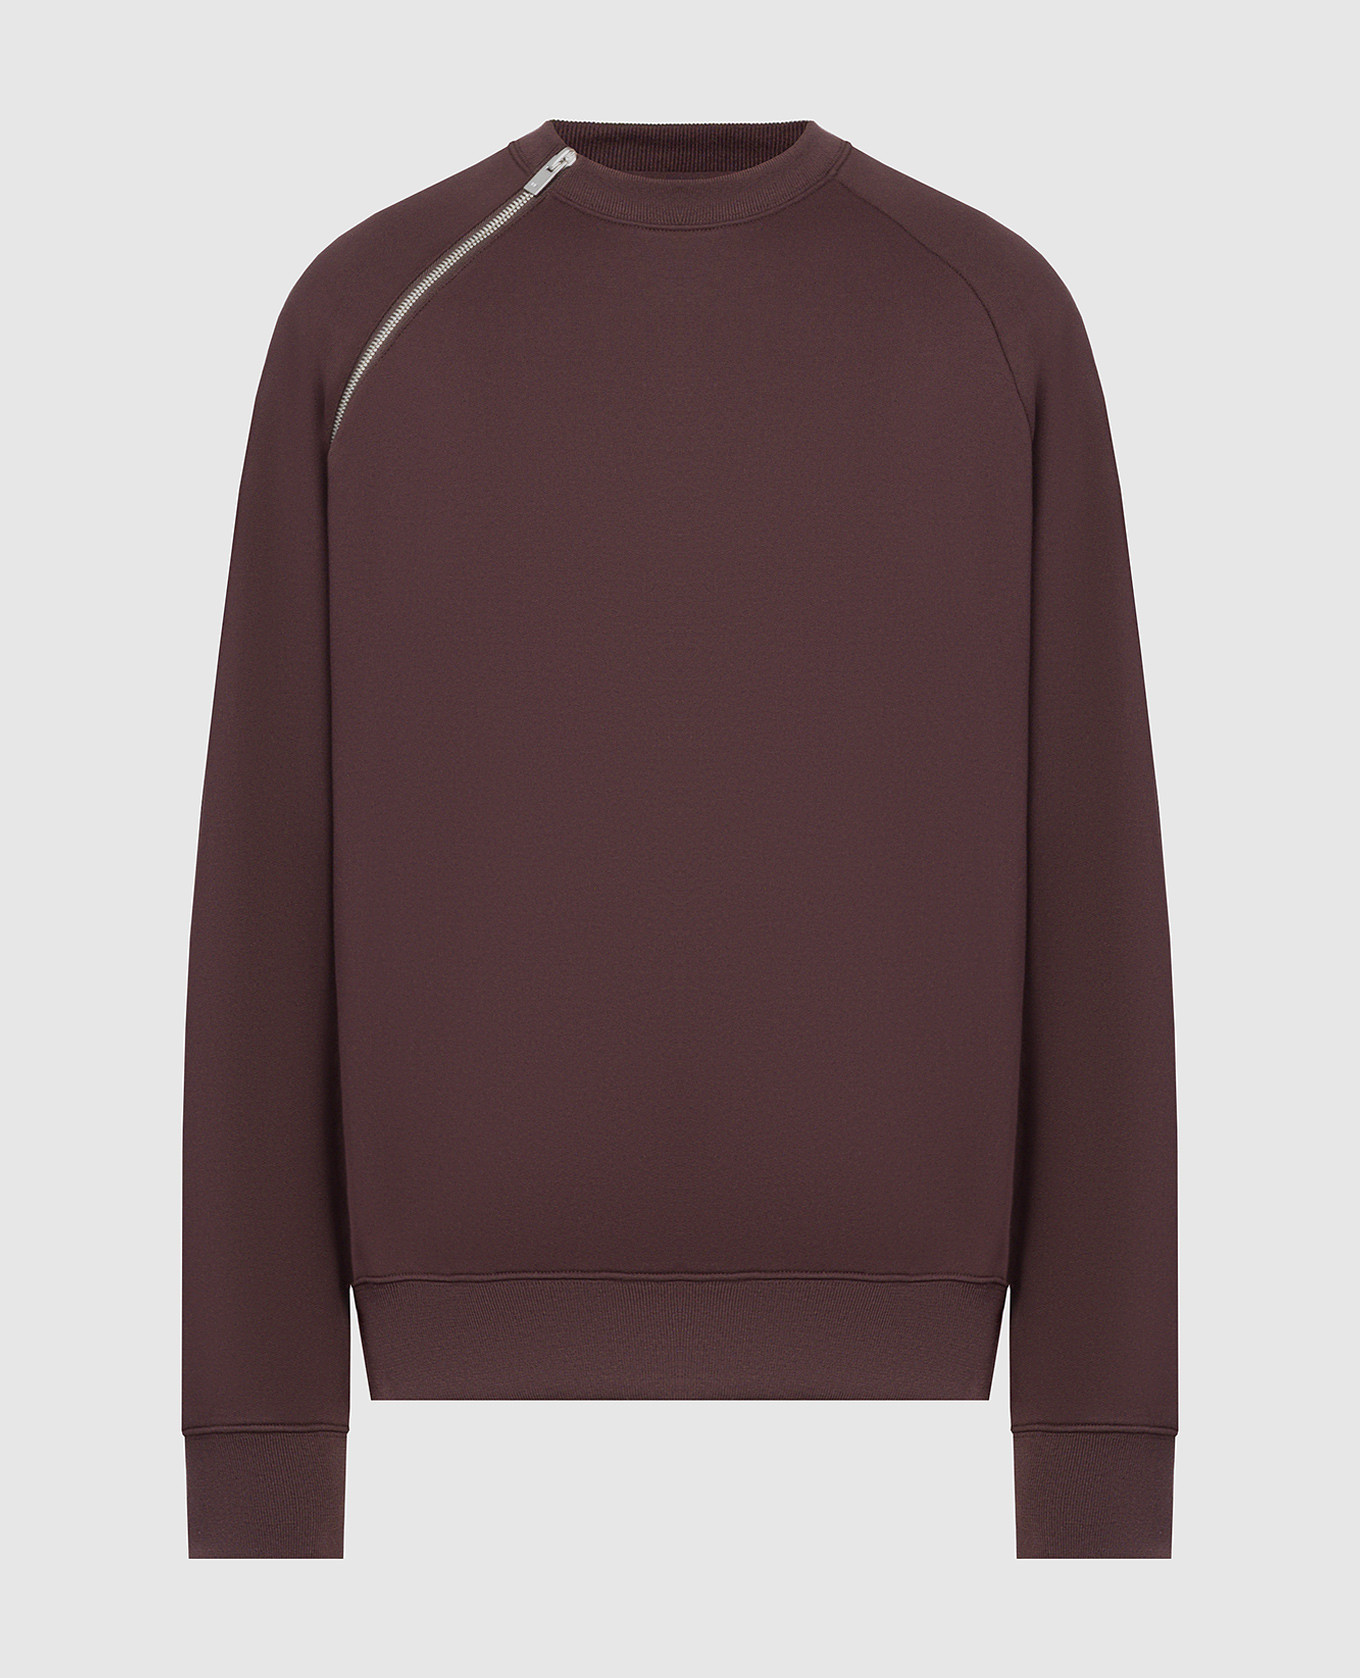 Sequence burgundy sweatshirt with zipper